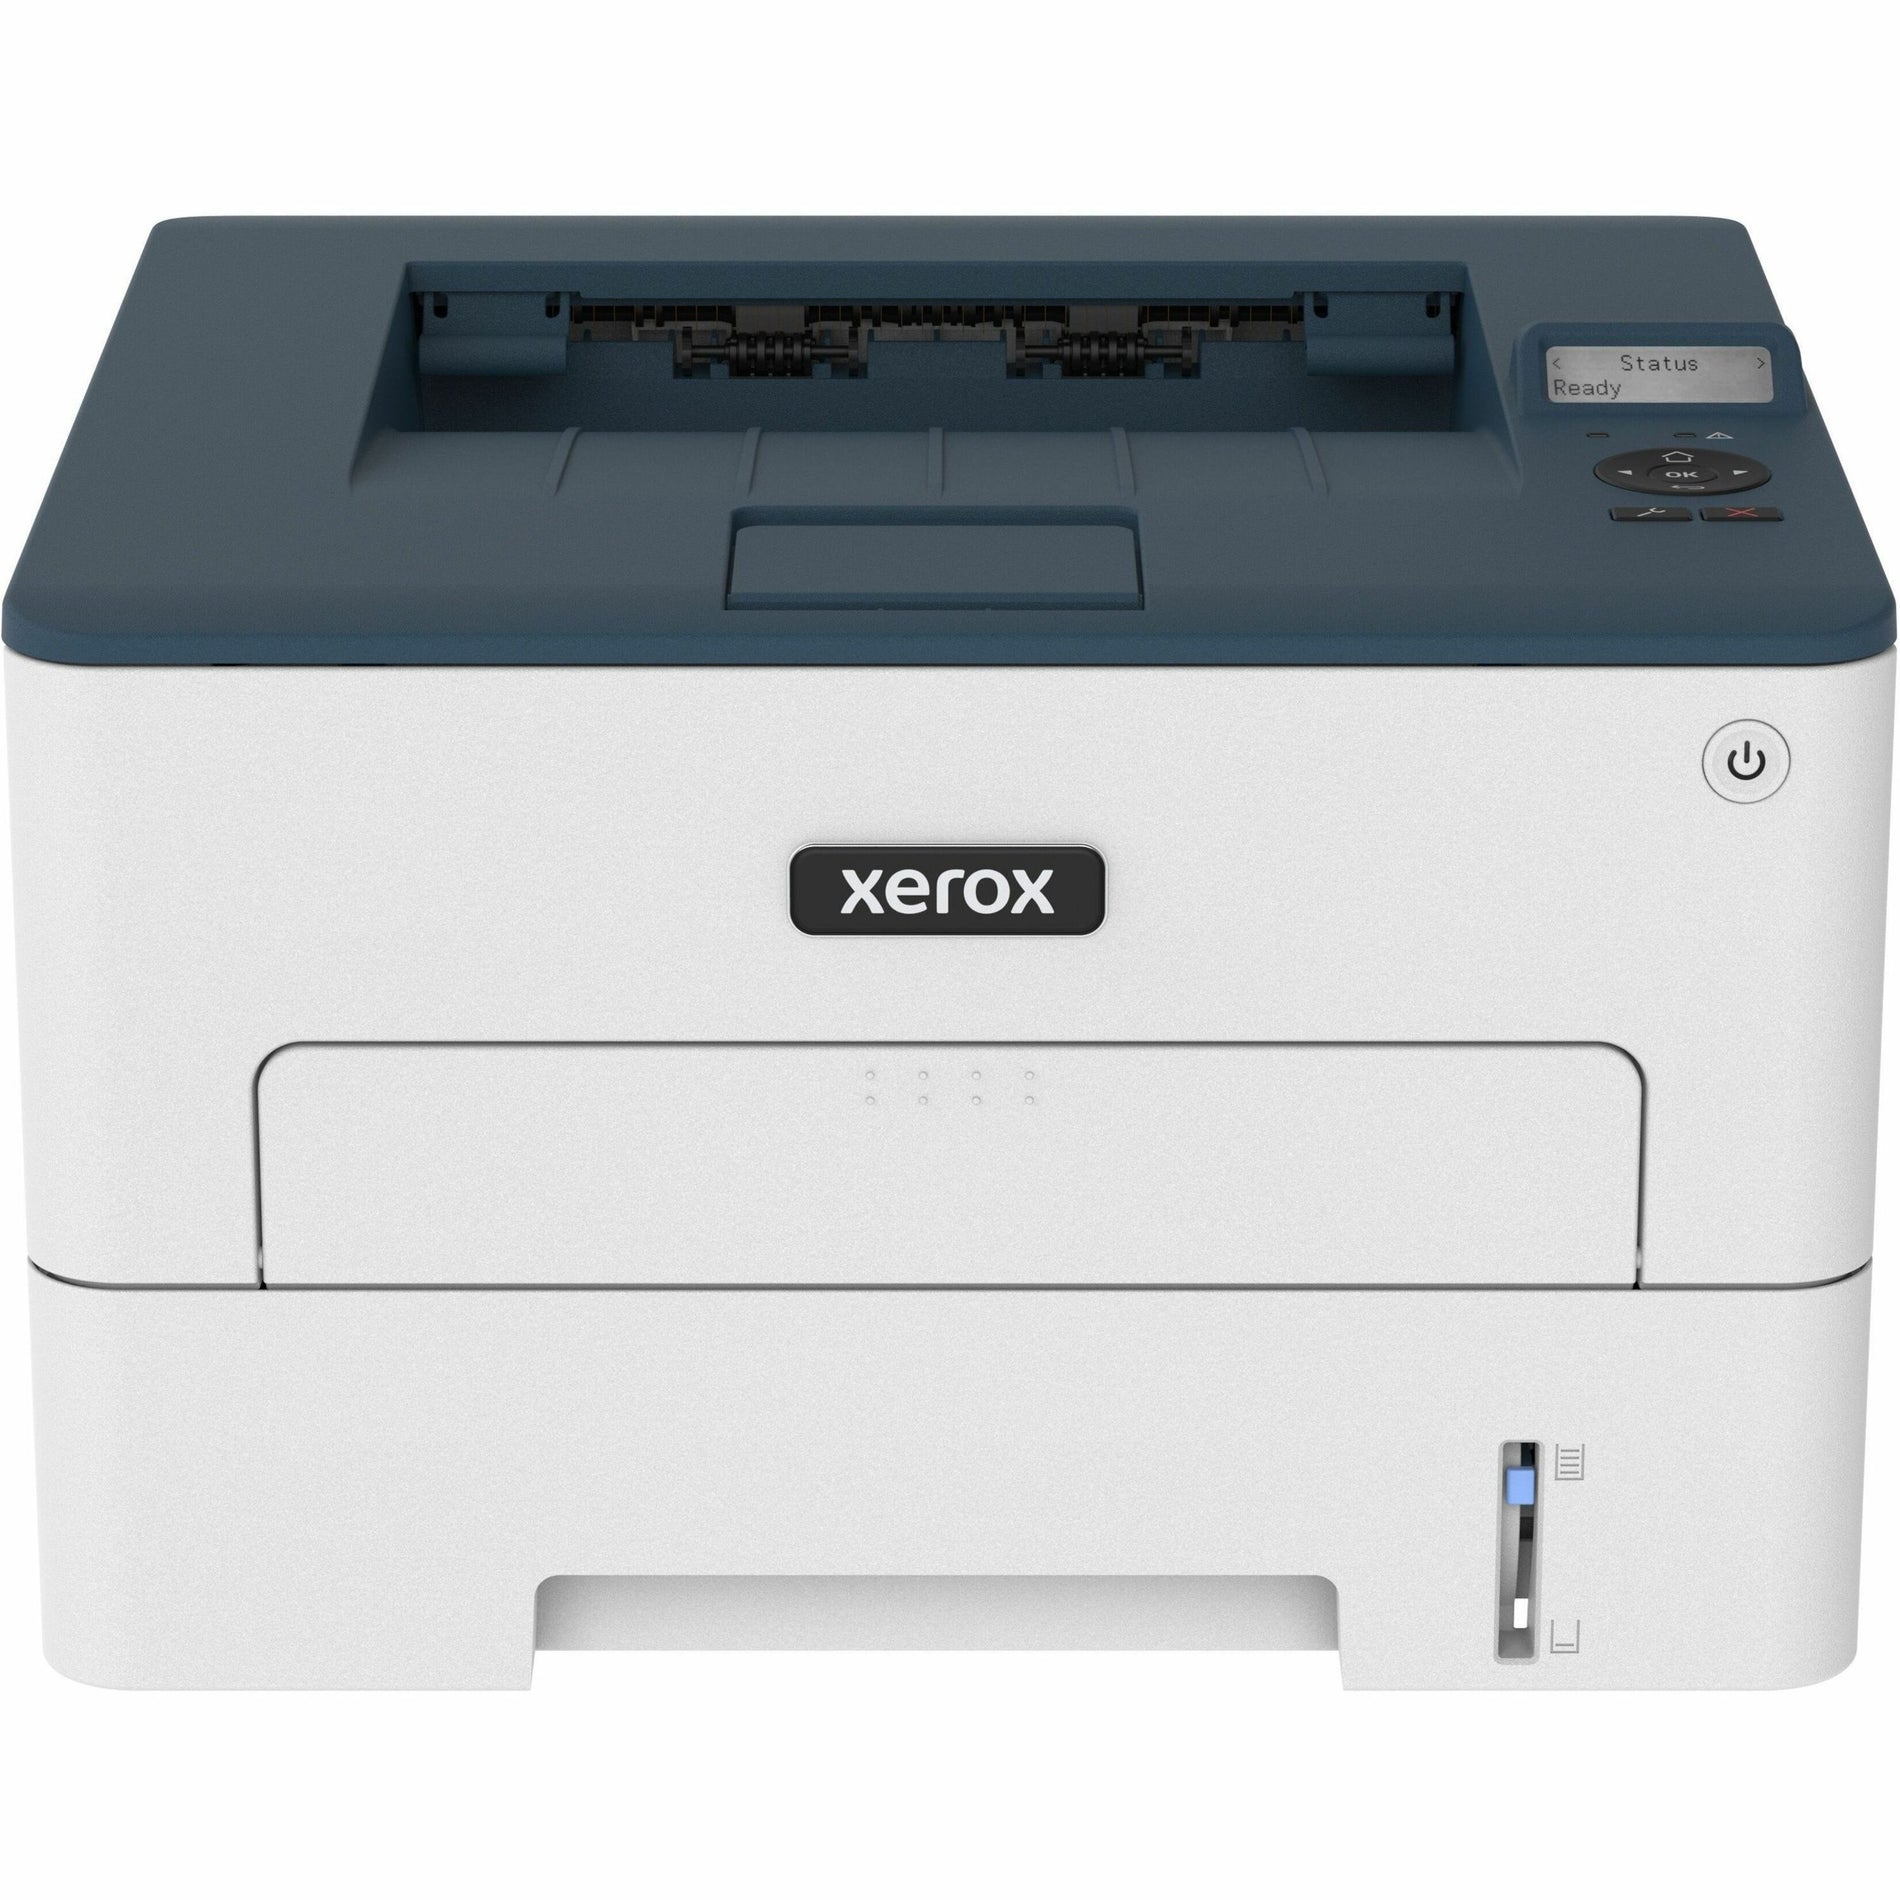 Xerox B230/DNI Desktop Wireless Laser Printer - Monochrome, 36 ppm, Automatic Duplex Printing, Wireless Connectivity